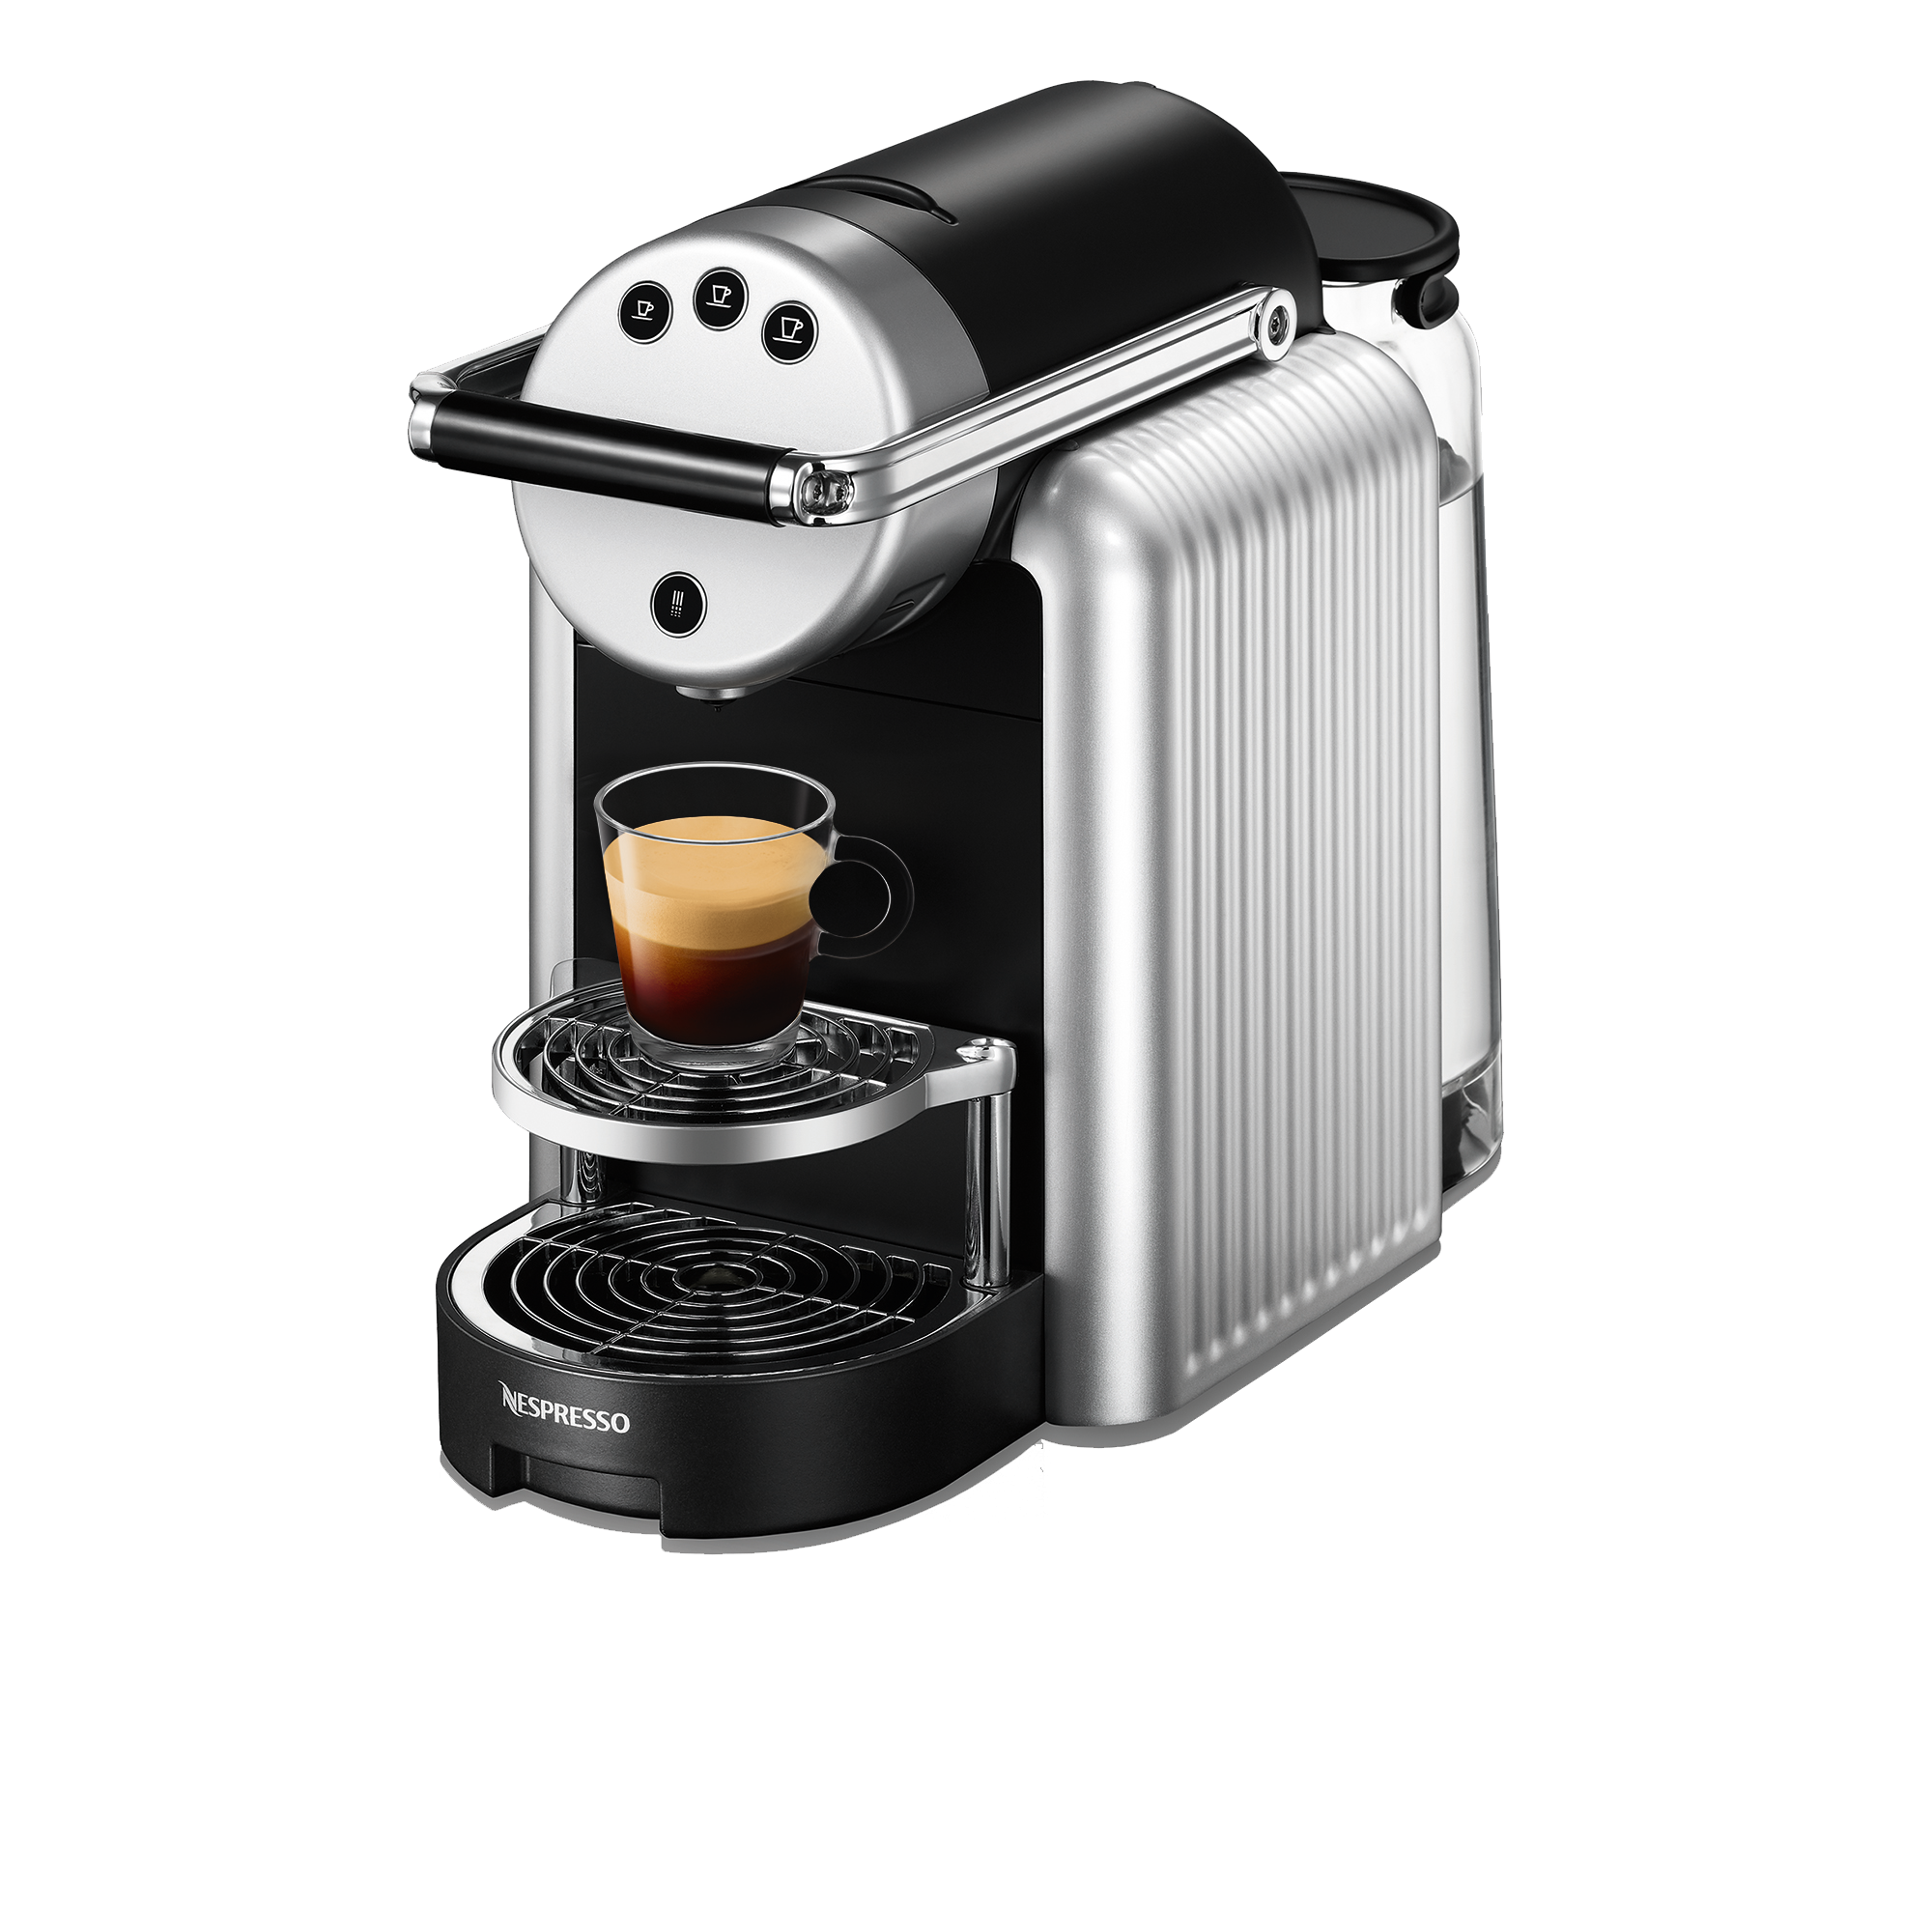 Roux kulstof klaver Commercial Coffee Machines Range | Nespresso Professional AU